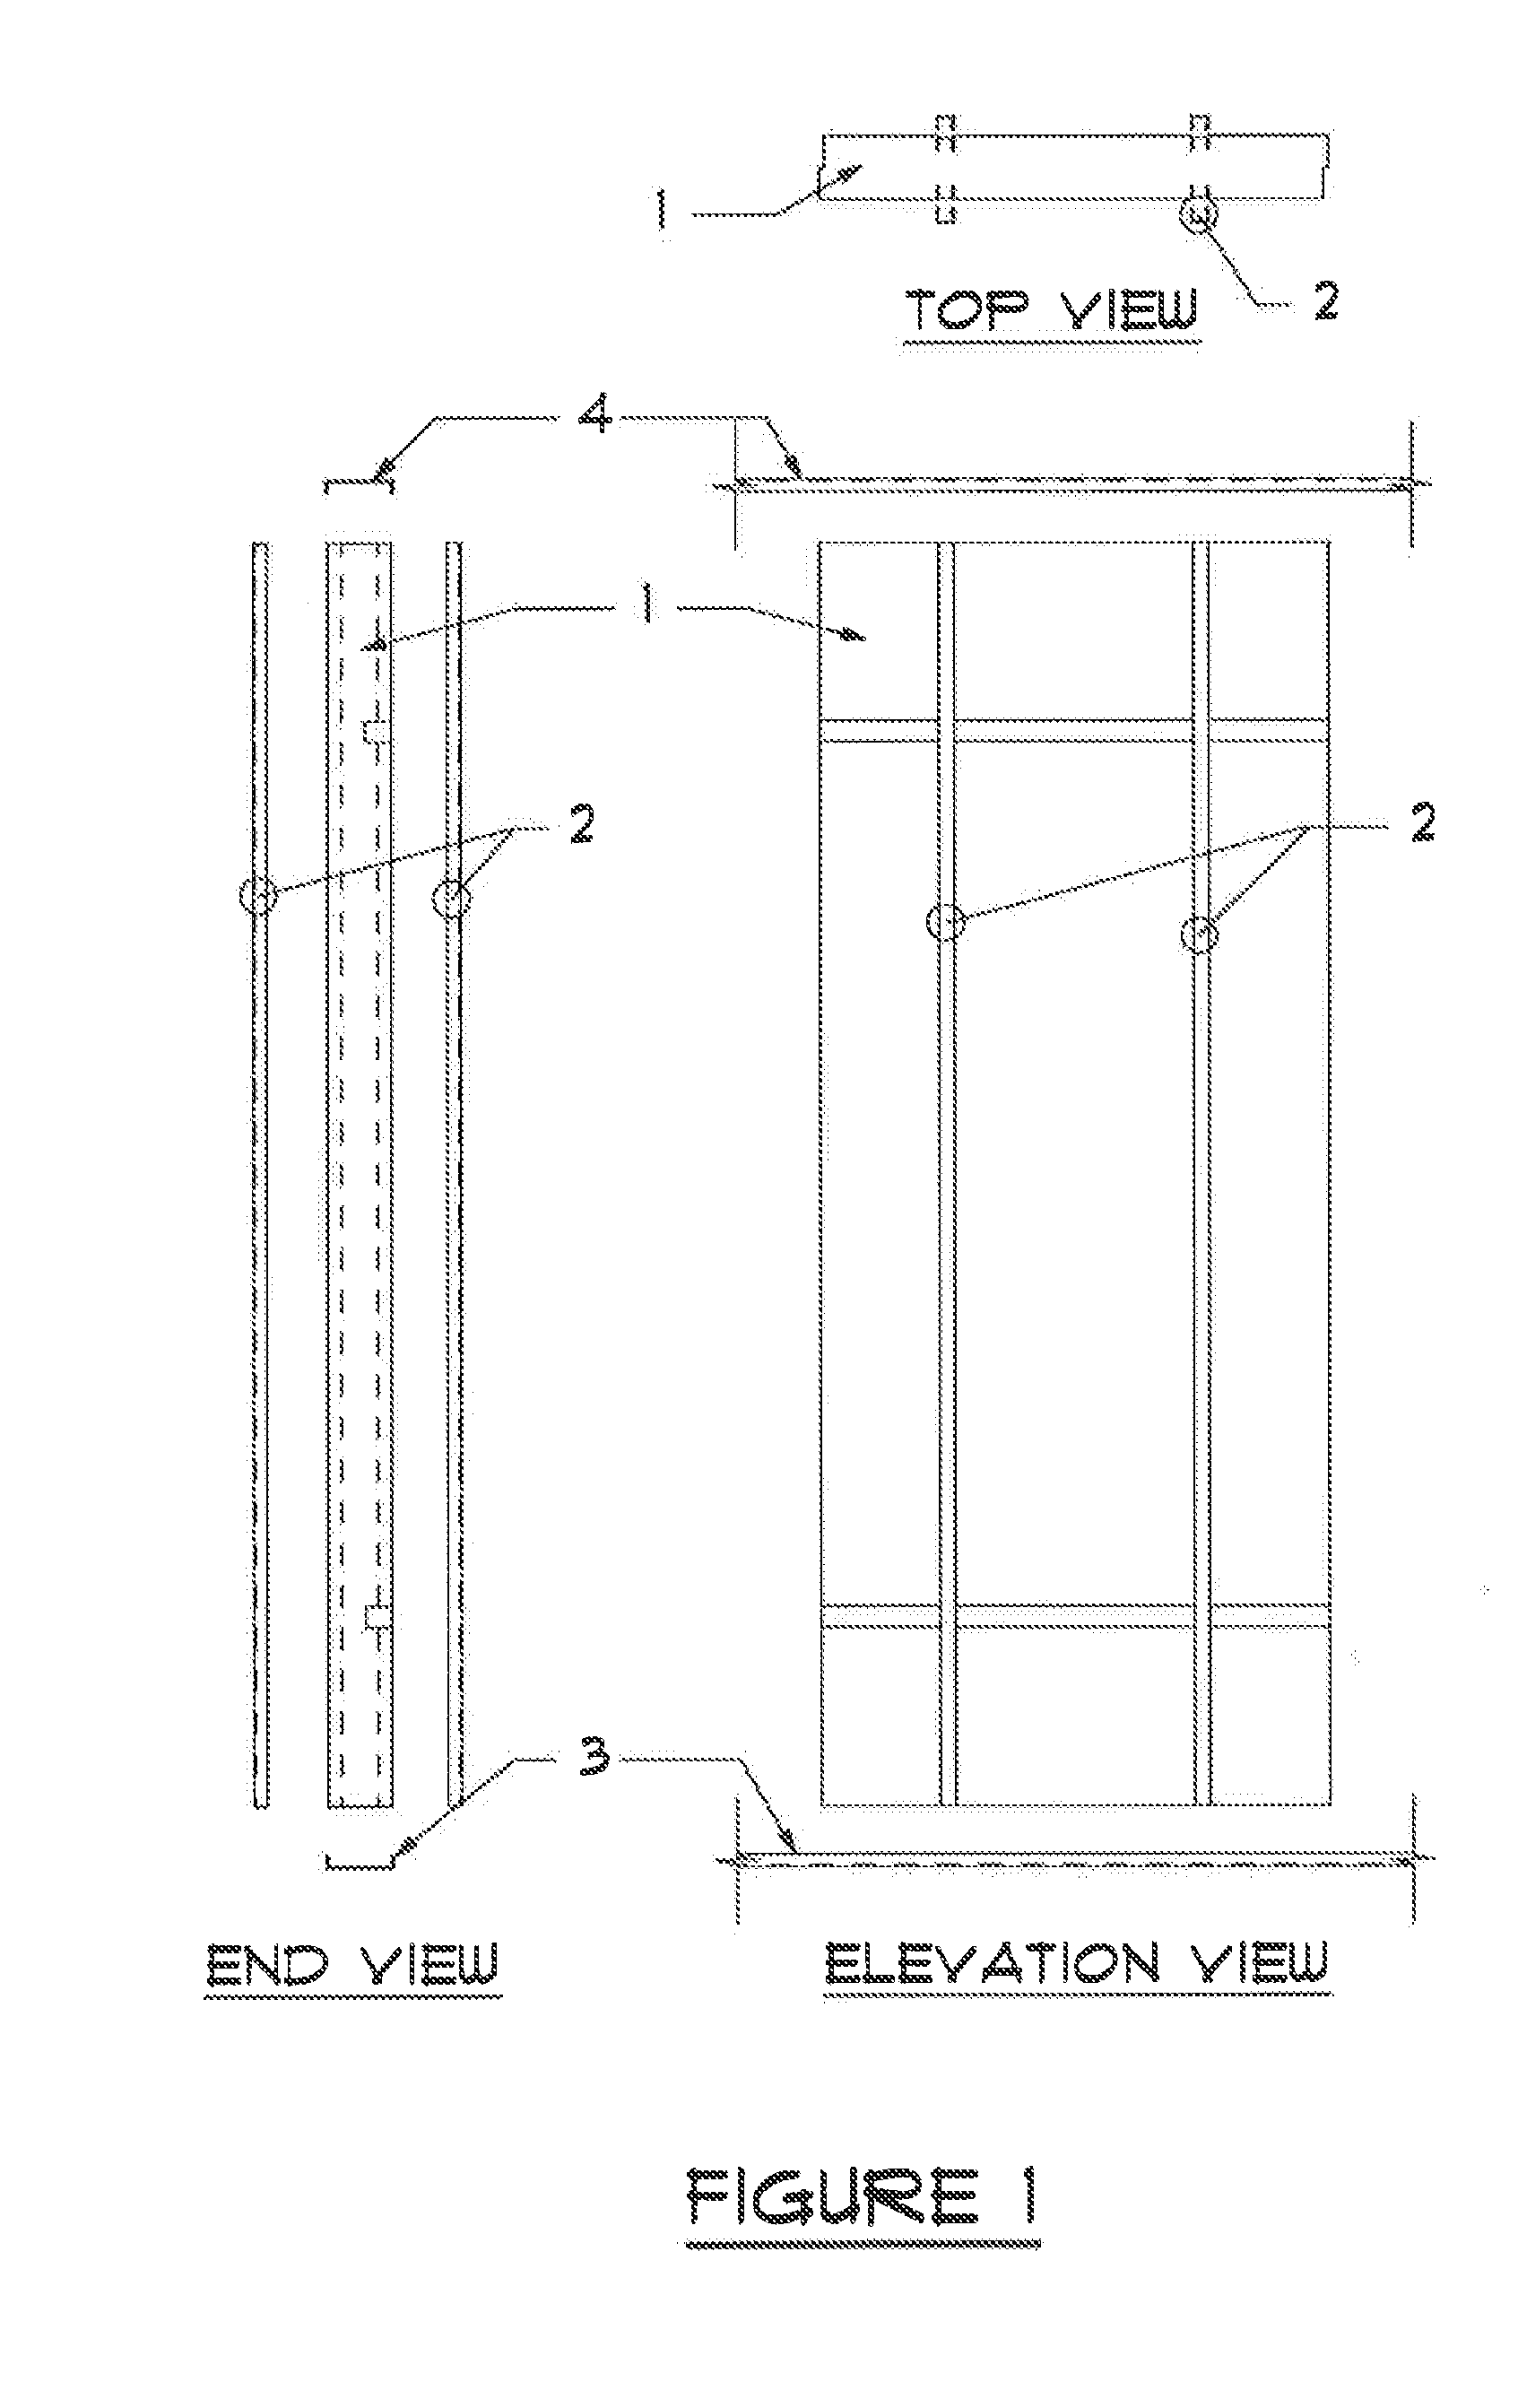 Construction system using interlocking panels